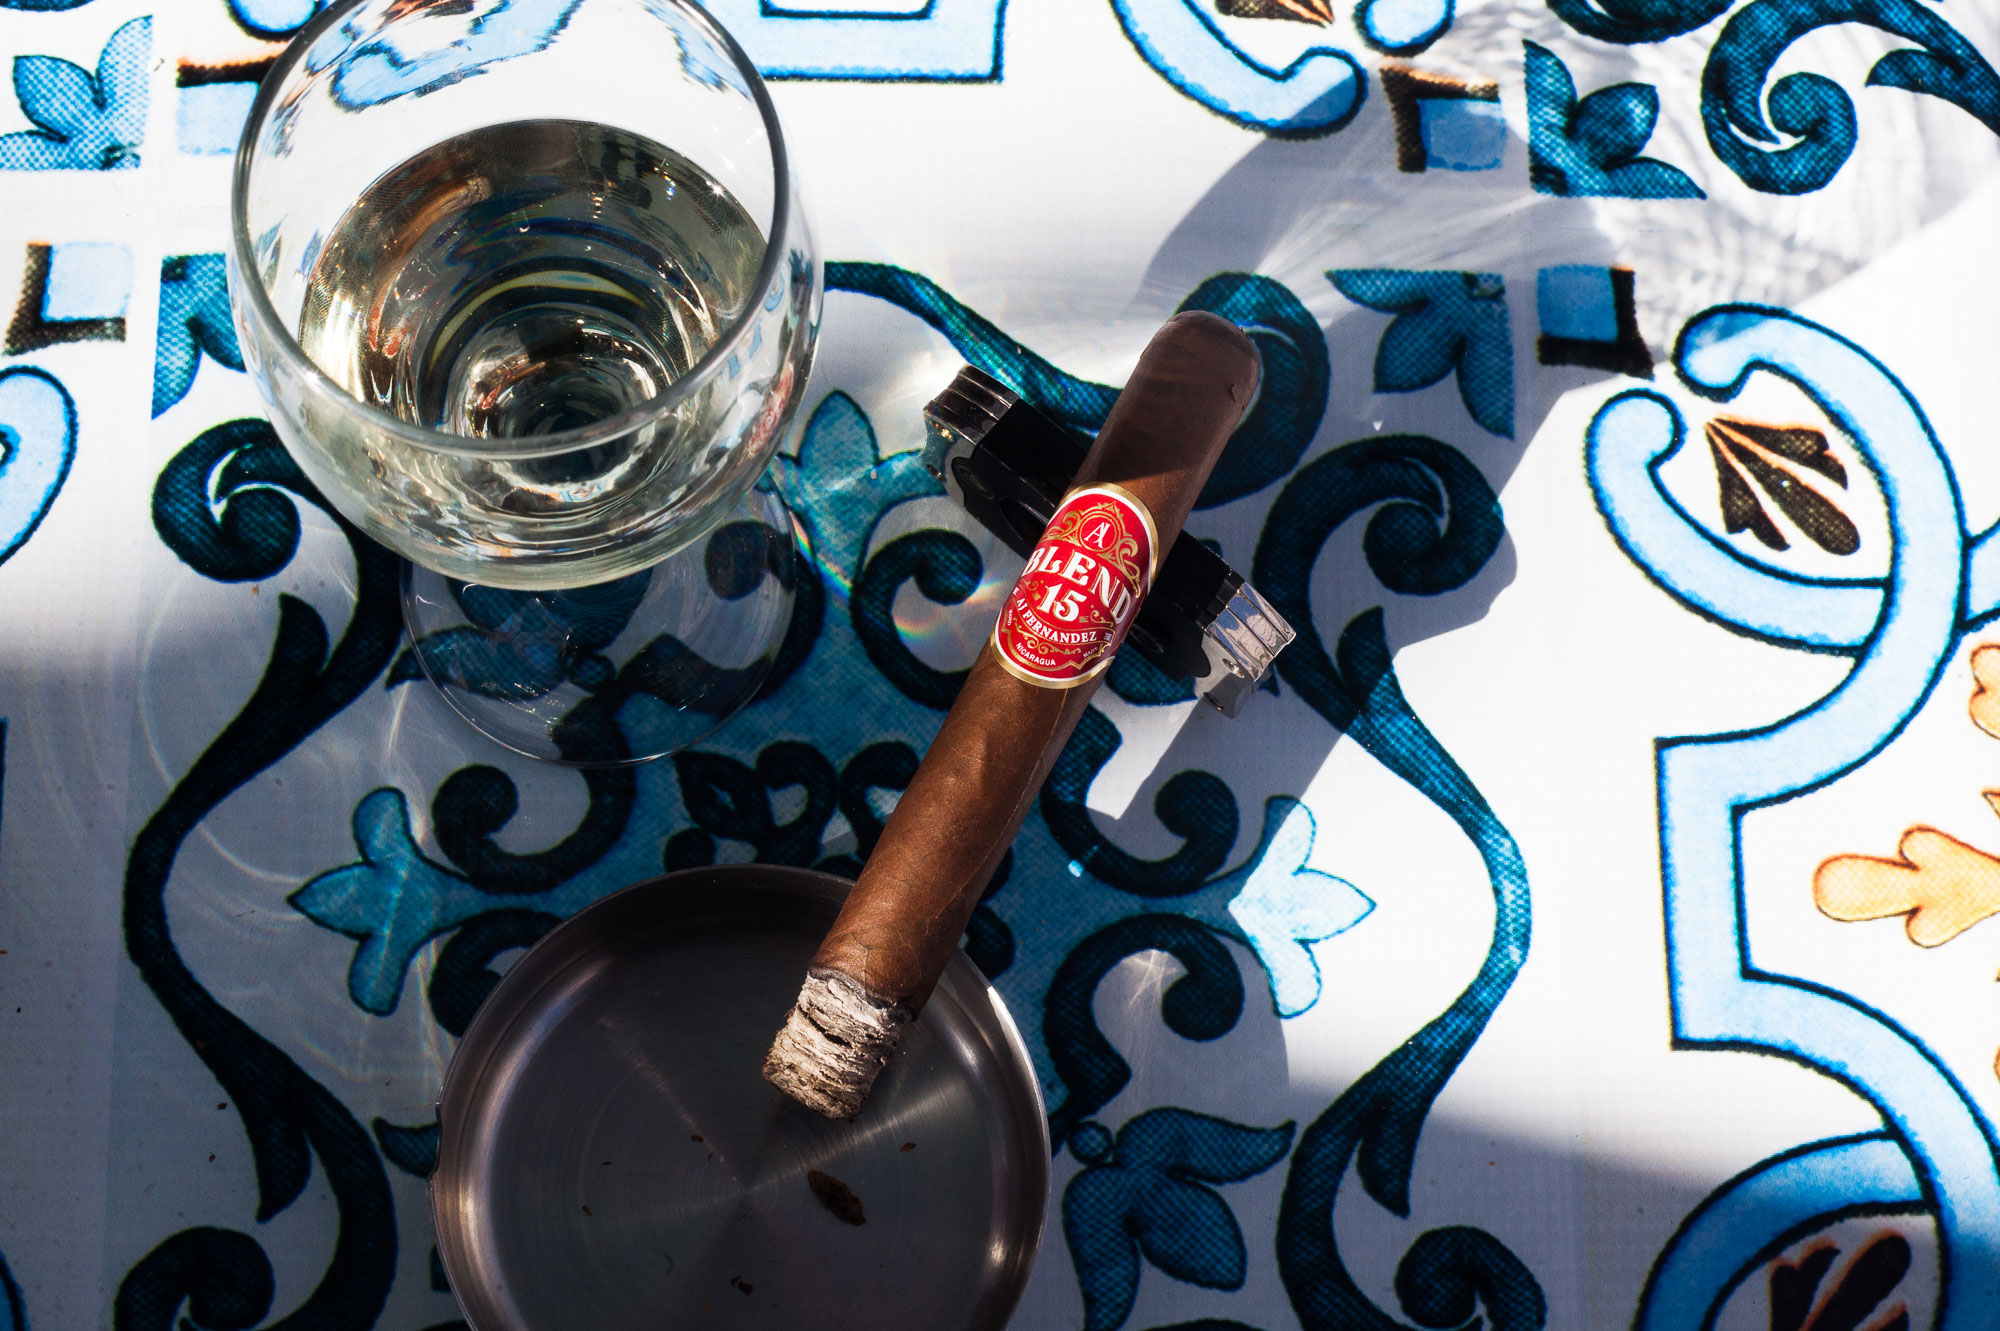 AJ Fernandez Blend 15 cigar paired with Casal Garcia Vinho Verde White Wine